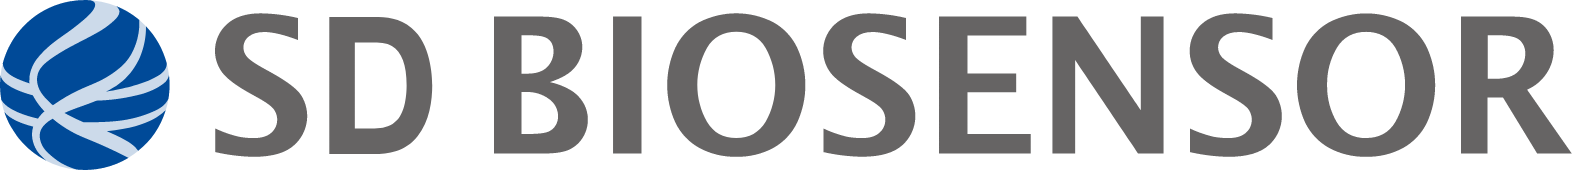 SD BioSensor logo large (transparent PNG)